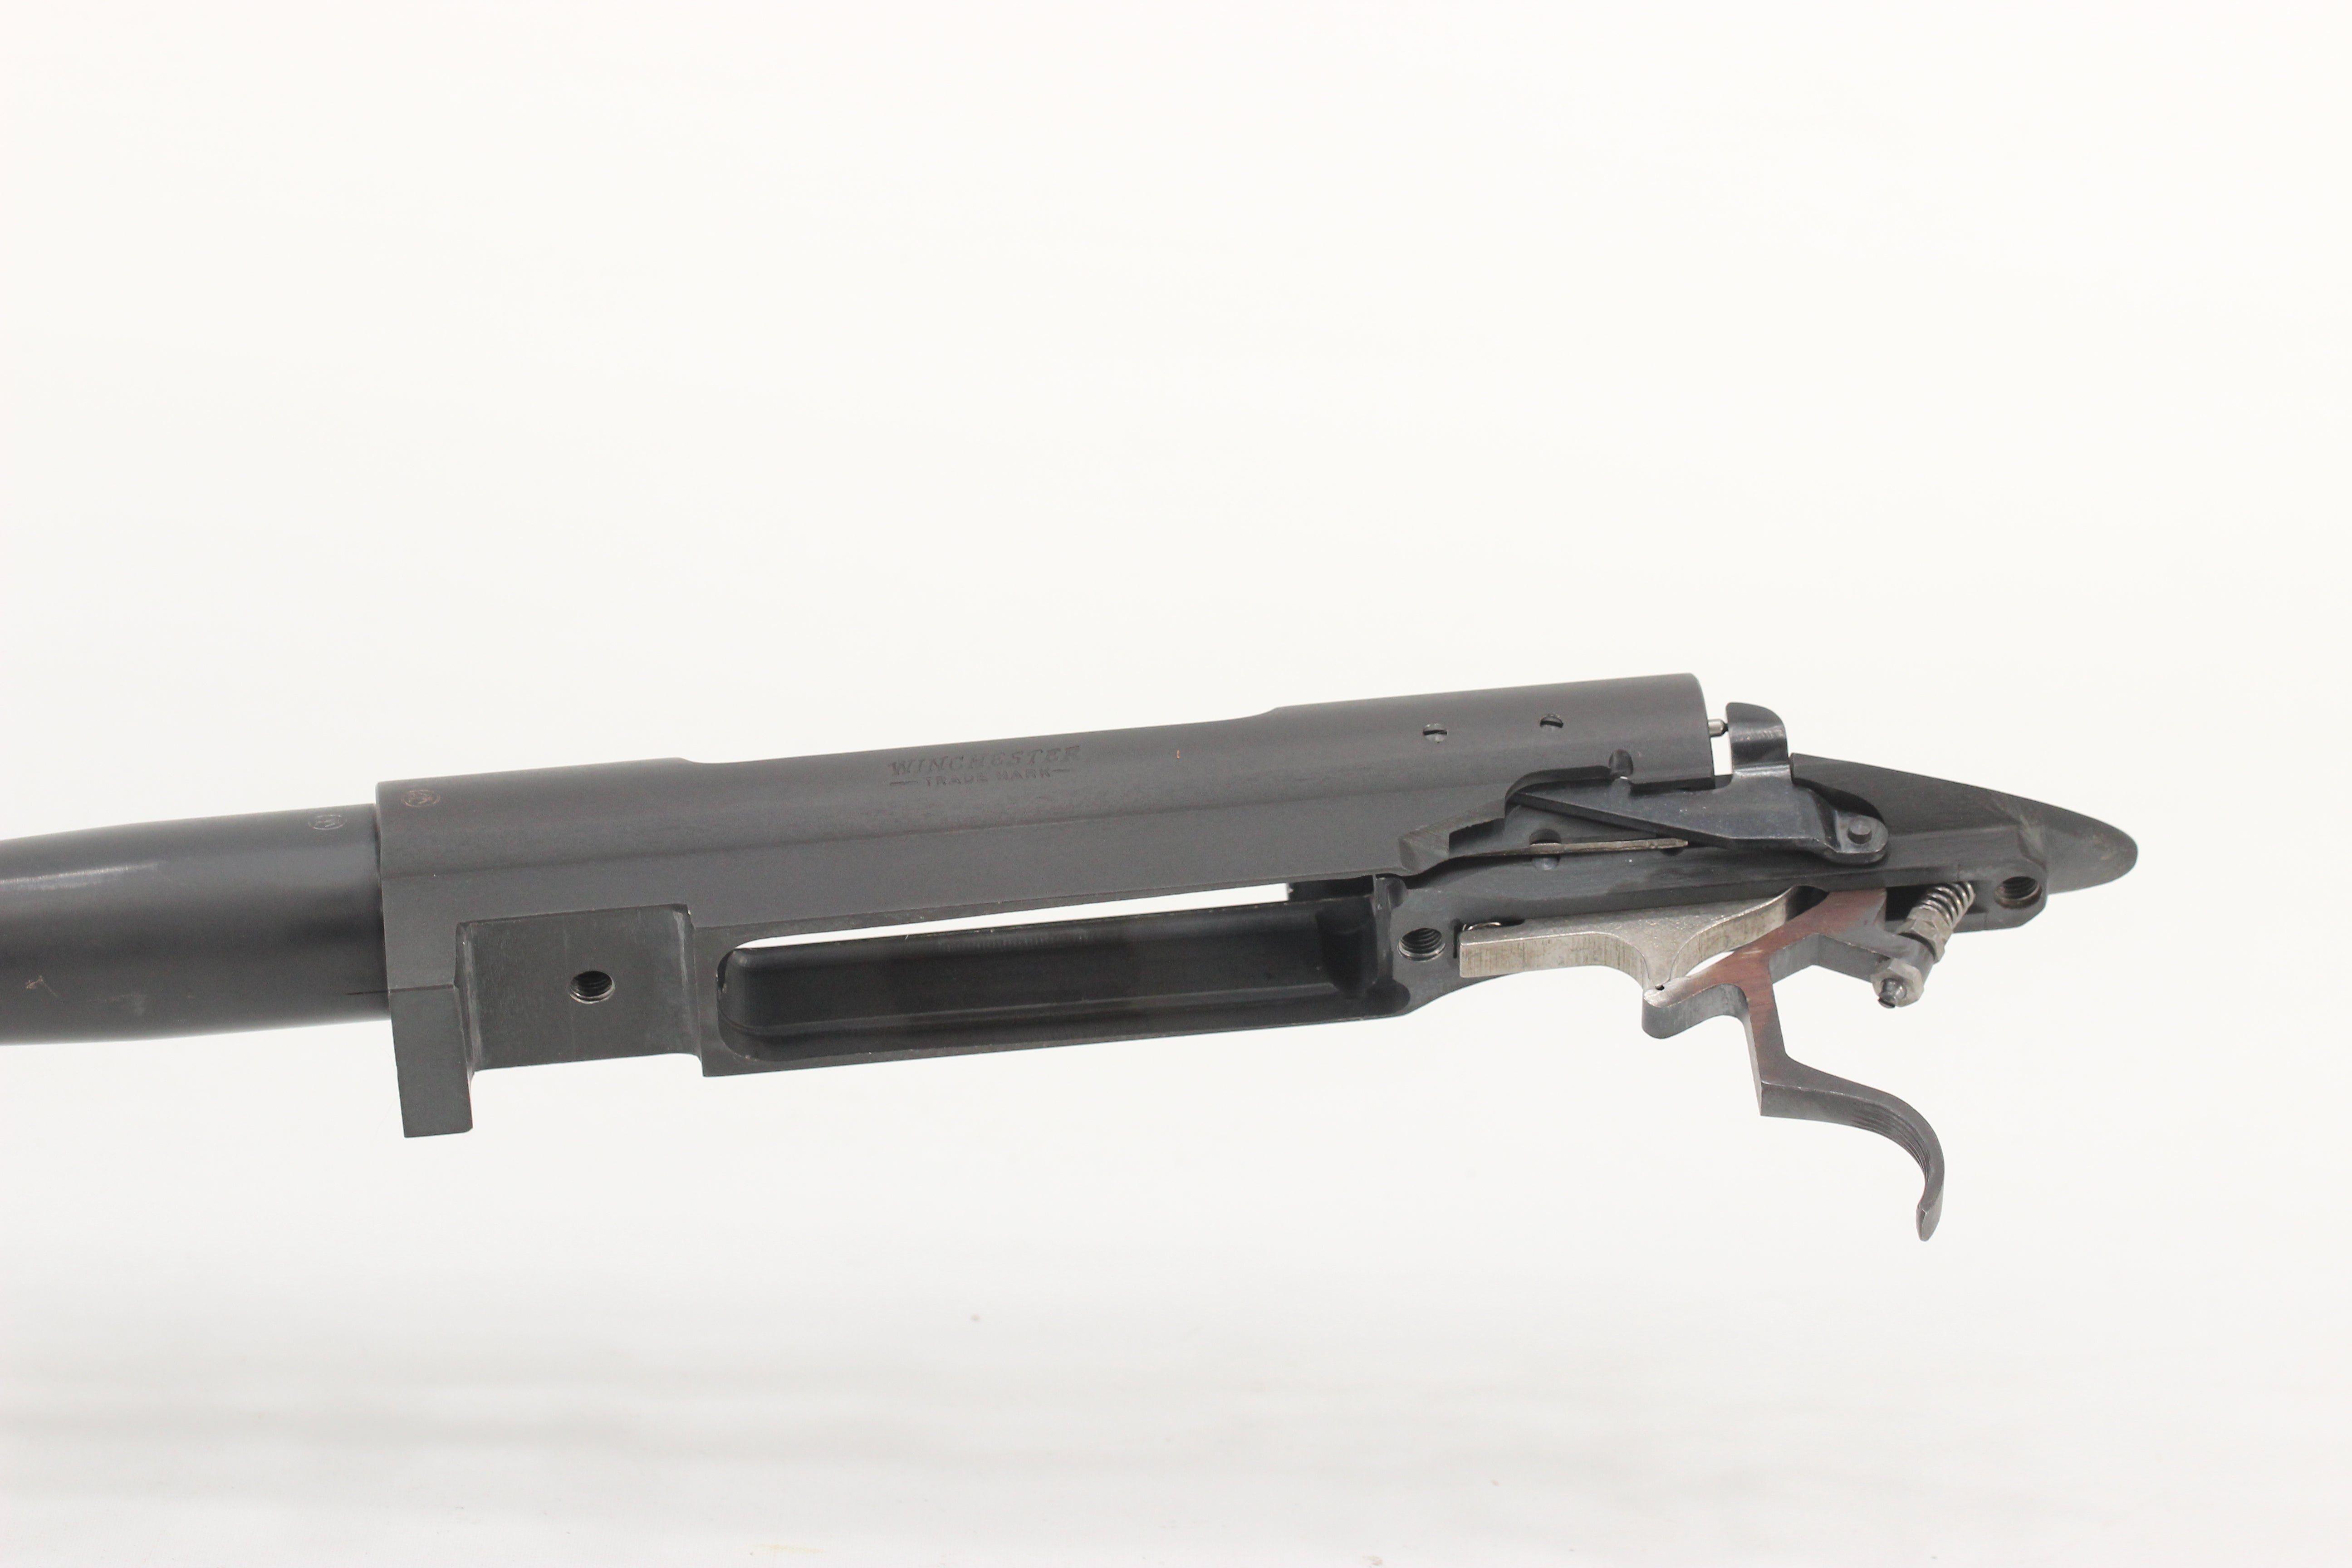 .264 Win Magnum Standard Rifle - 1960